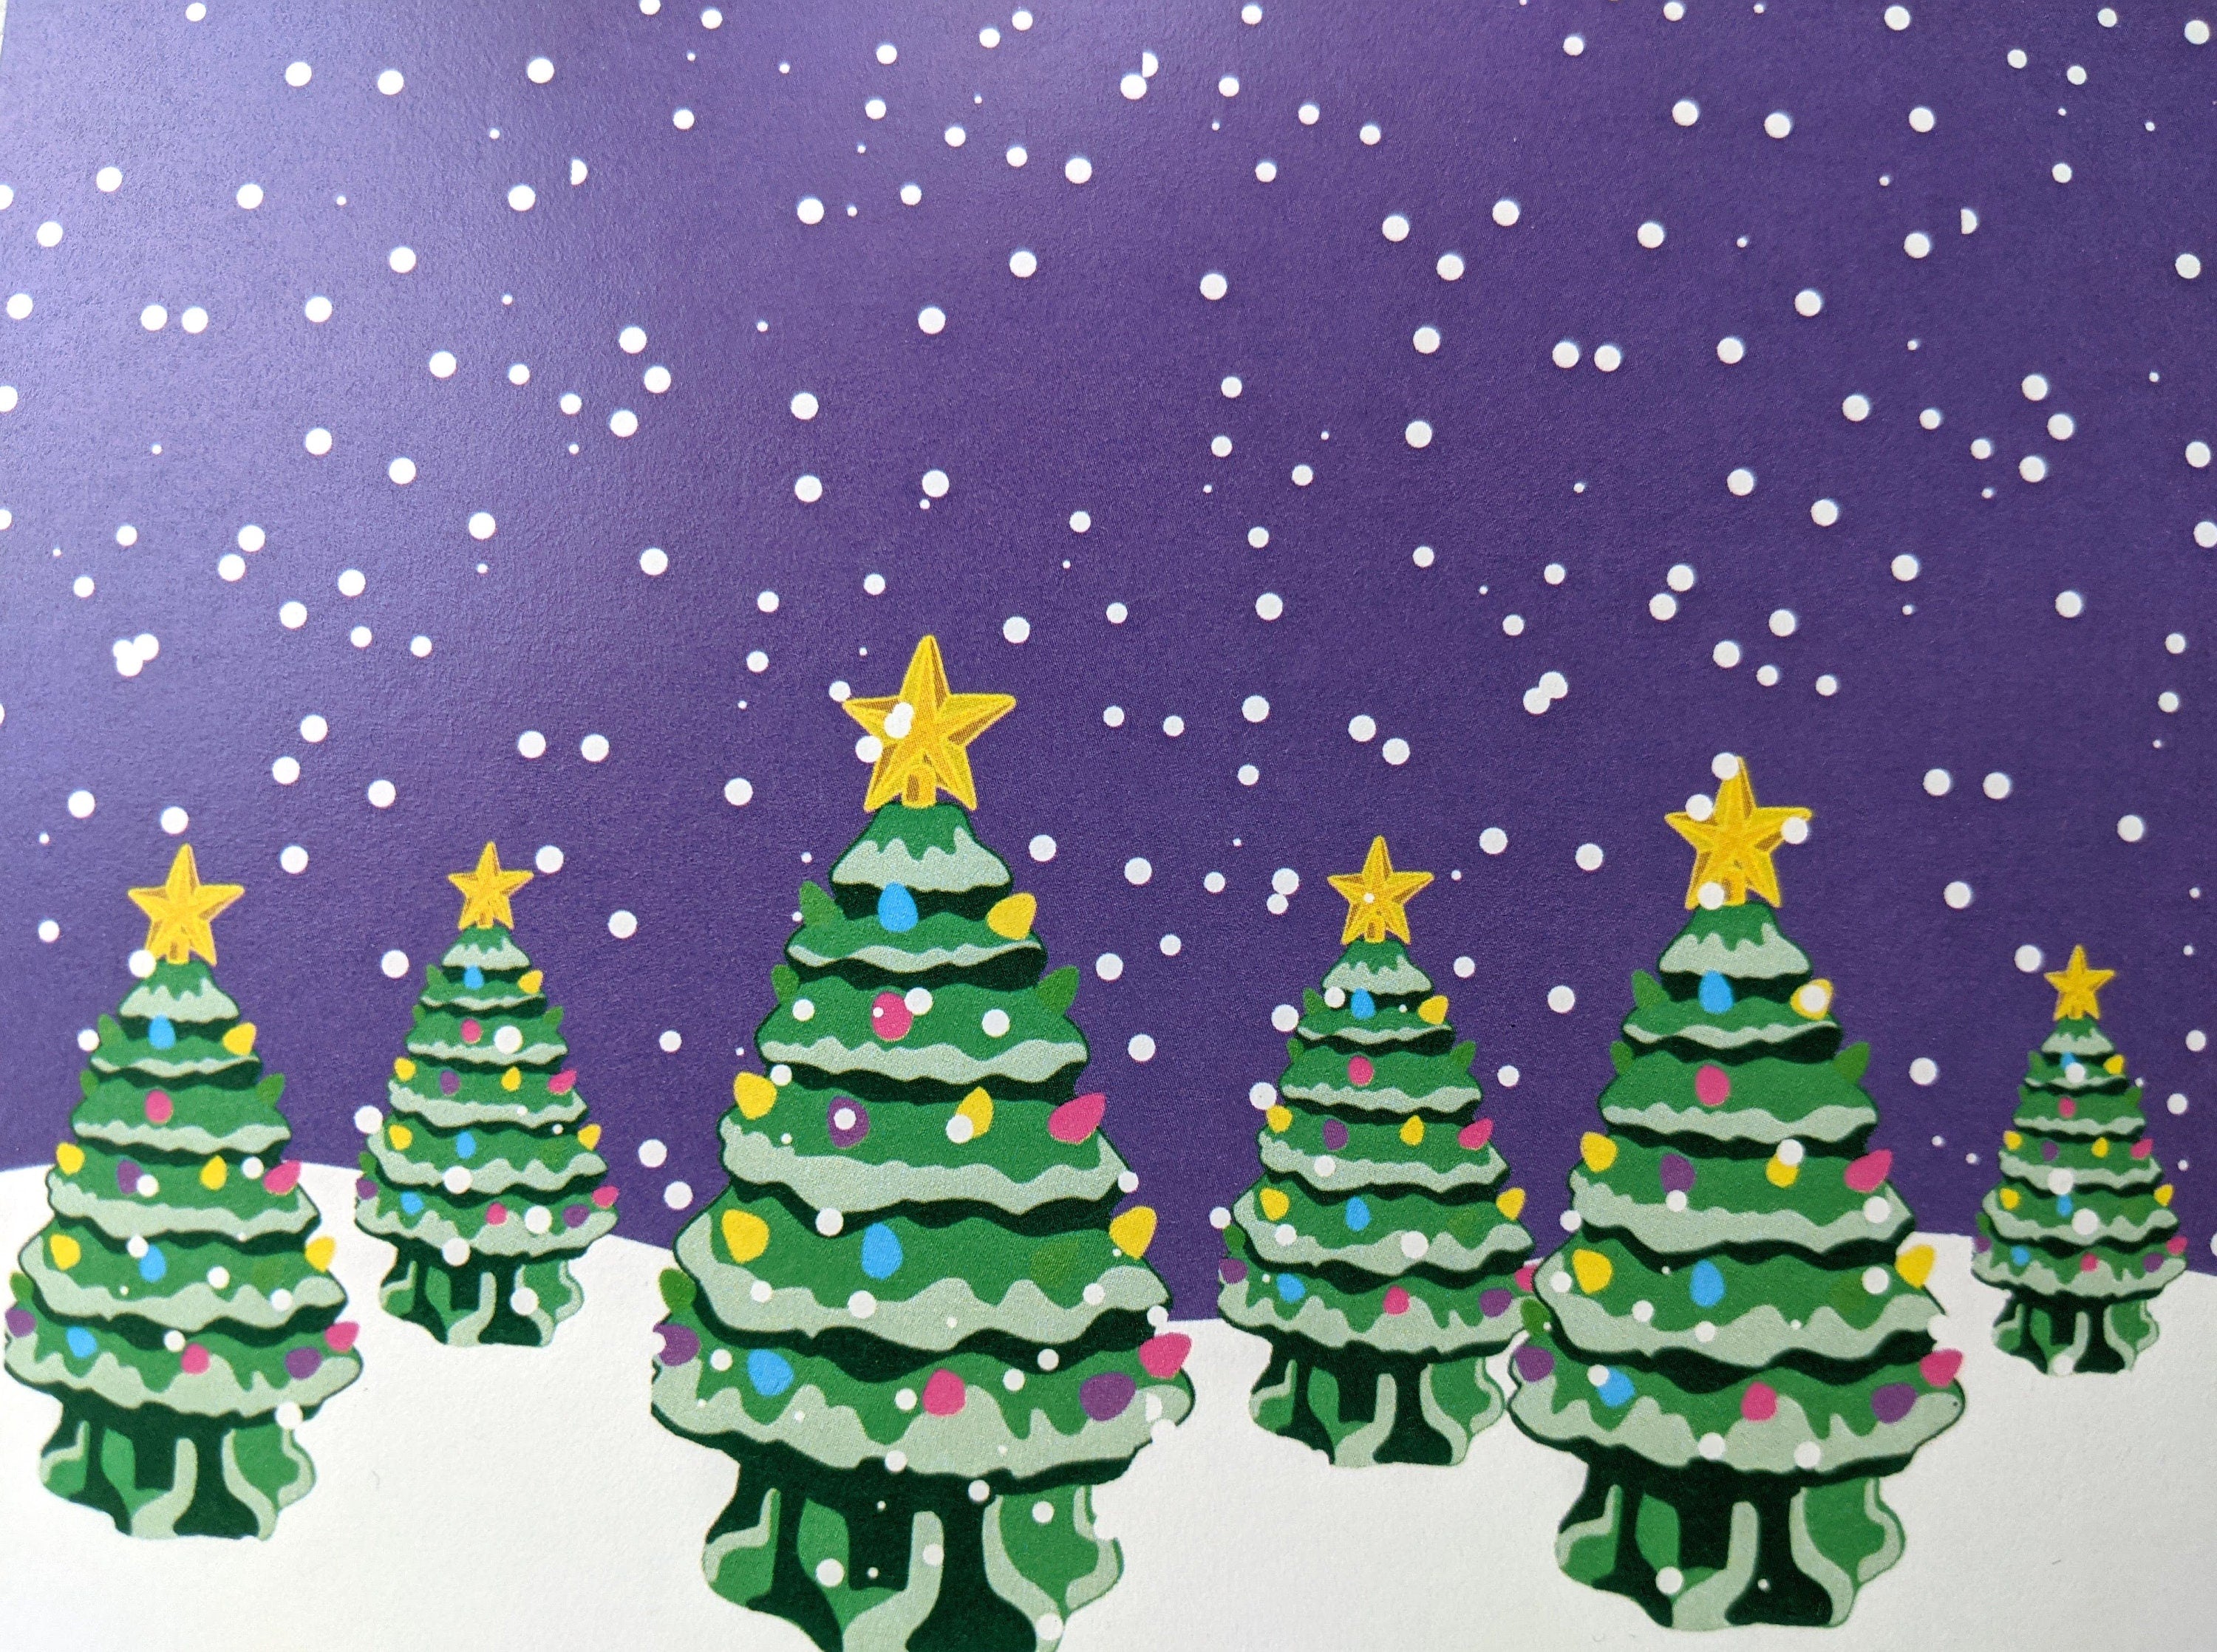 Ceramic Christmas Trees Blank Greeting Card, 4.25 x 5.5"